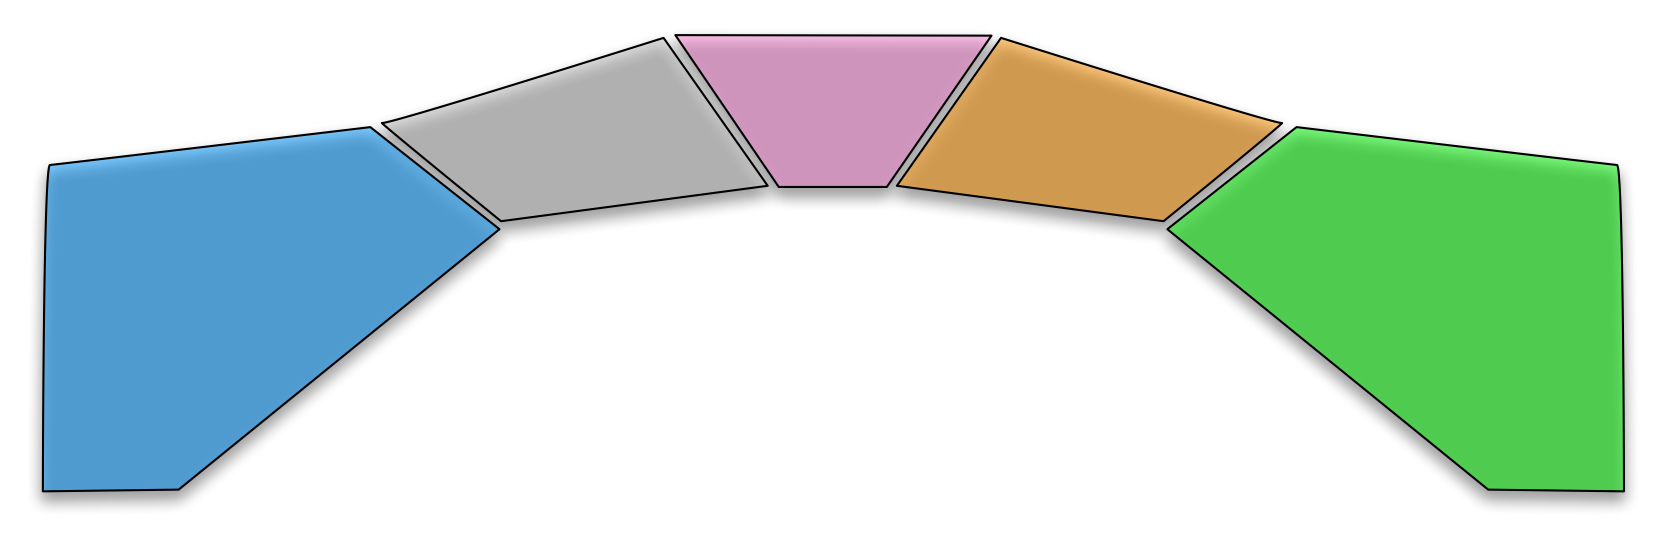 AF core method - bridge colors